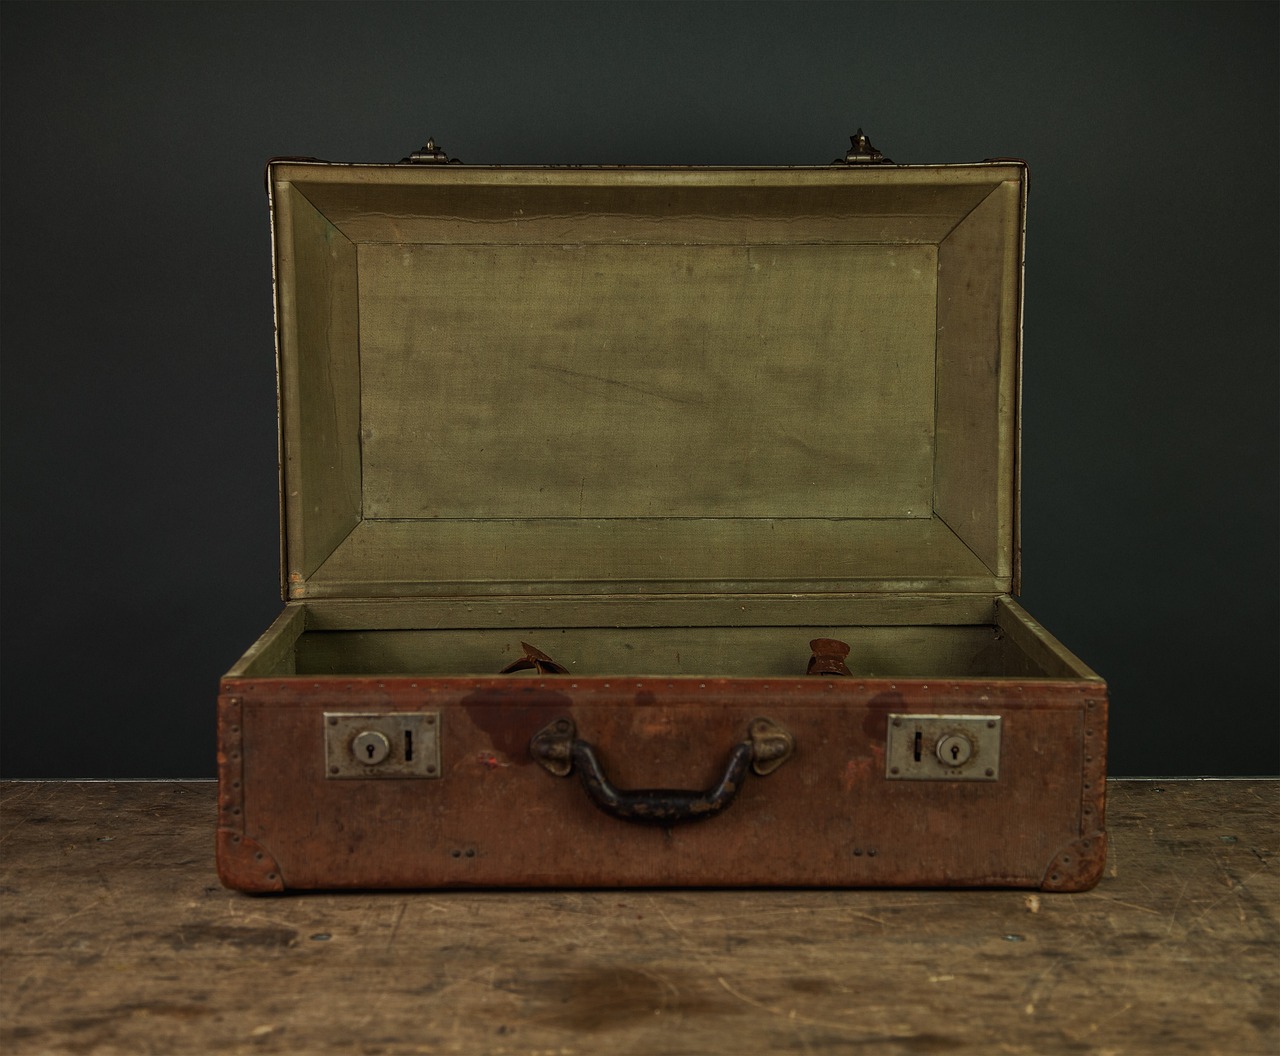 An open briefcase | Source: Pixabay